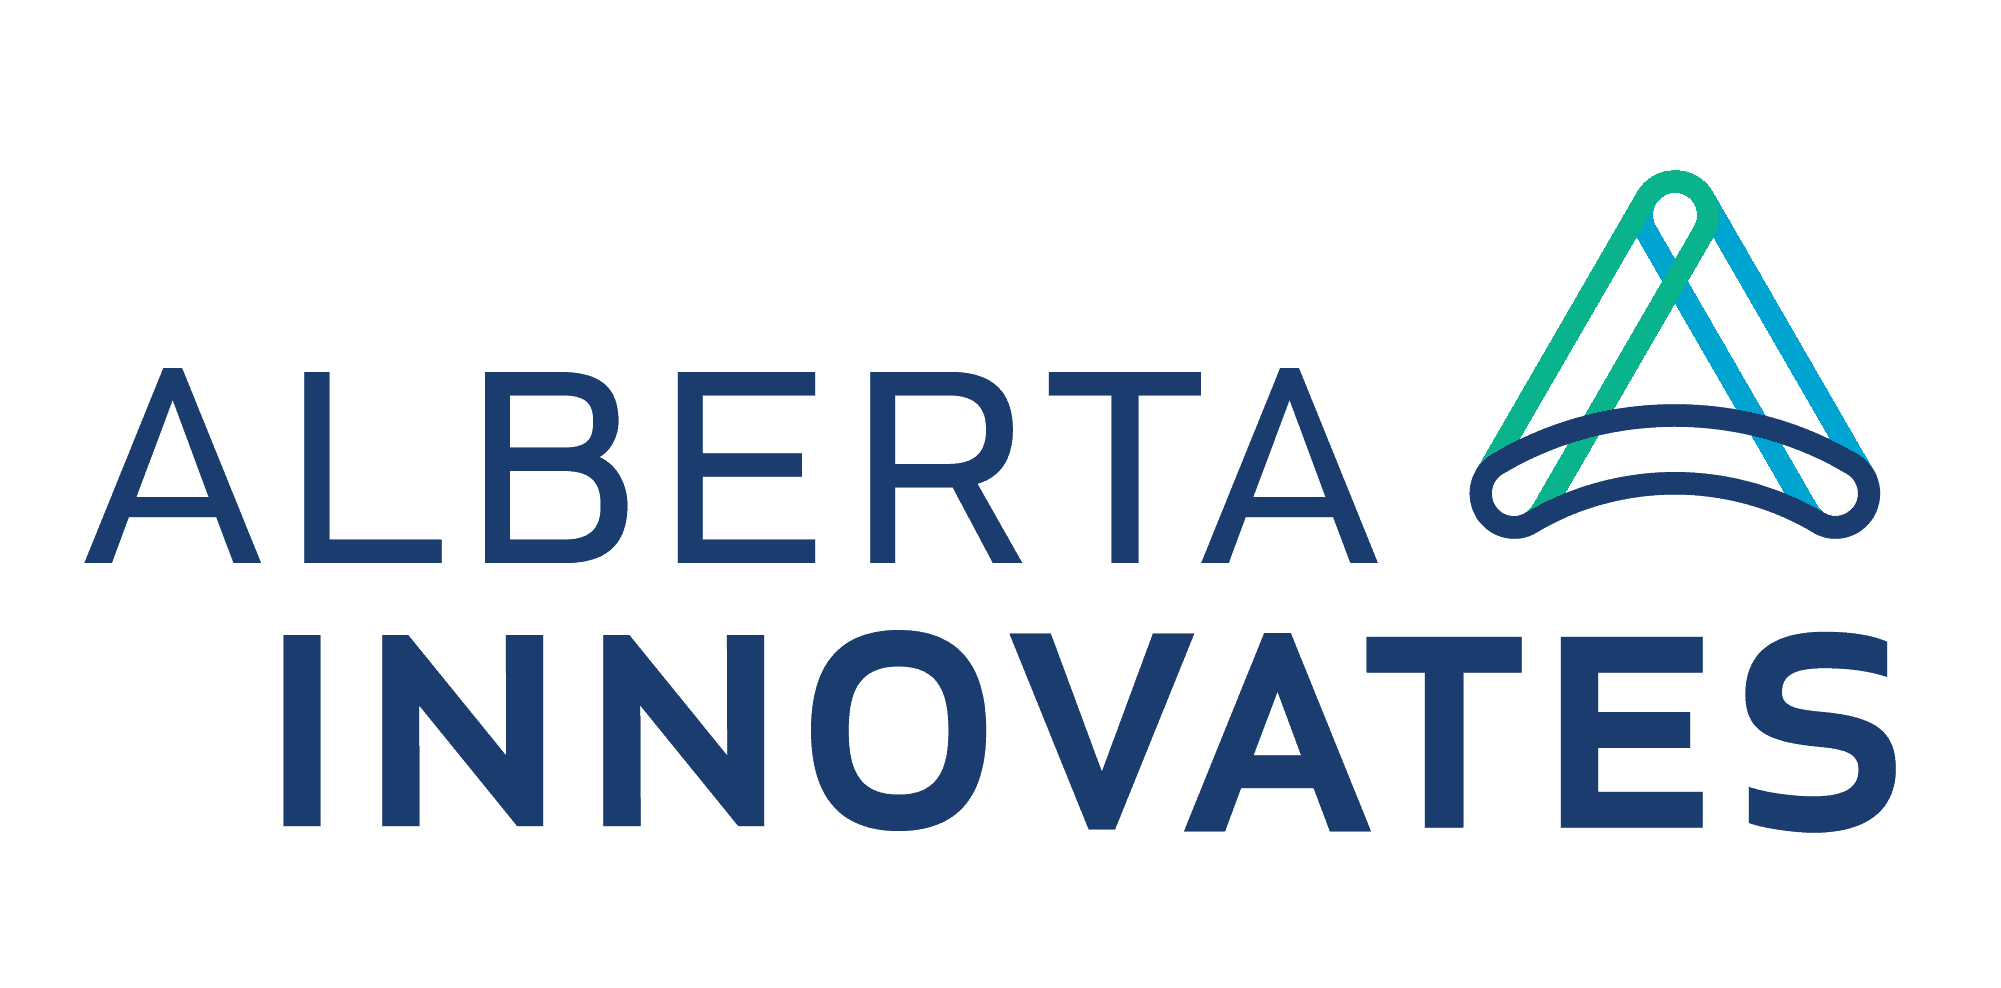 Alberta innovates logo on a green background showcasing artificial intelligence.